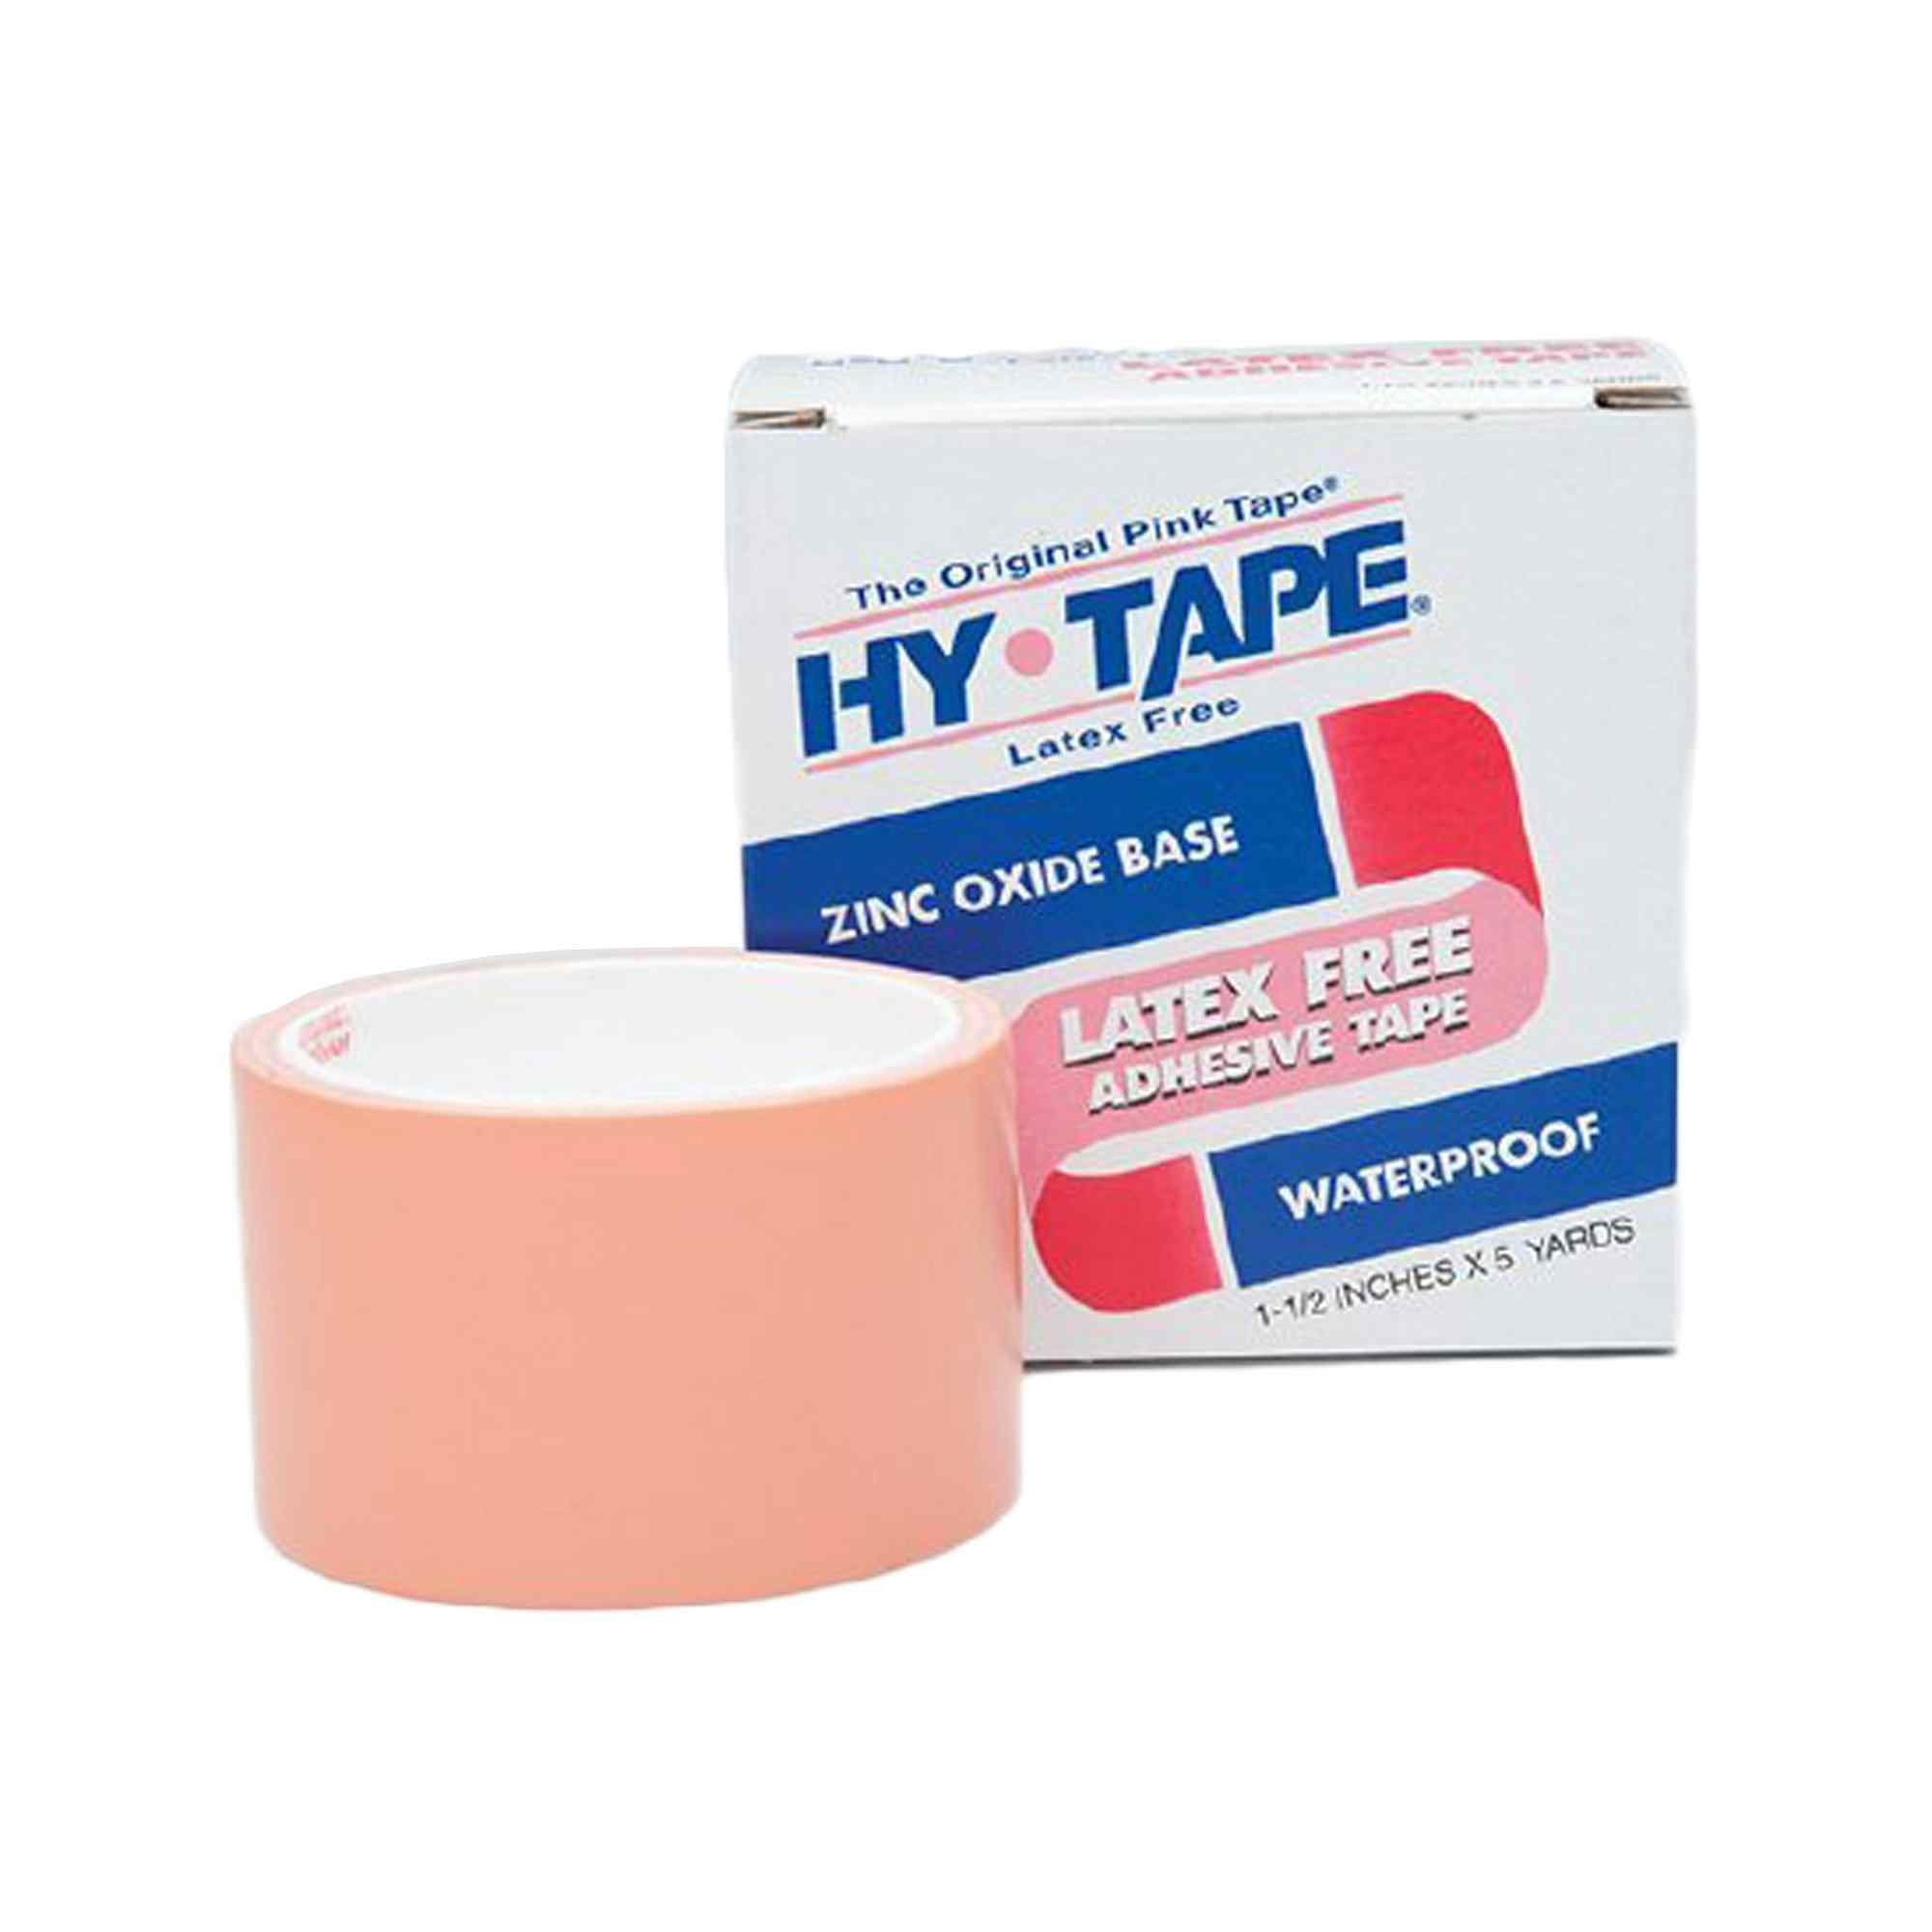 Hy-Tape Latex Free Zinc Oxide-Base Adhesive Tape, Waterproof, 2" X 5 yds, 120BLF, 1 Roll